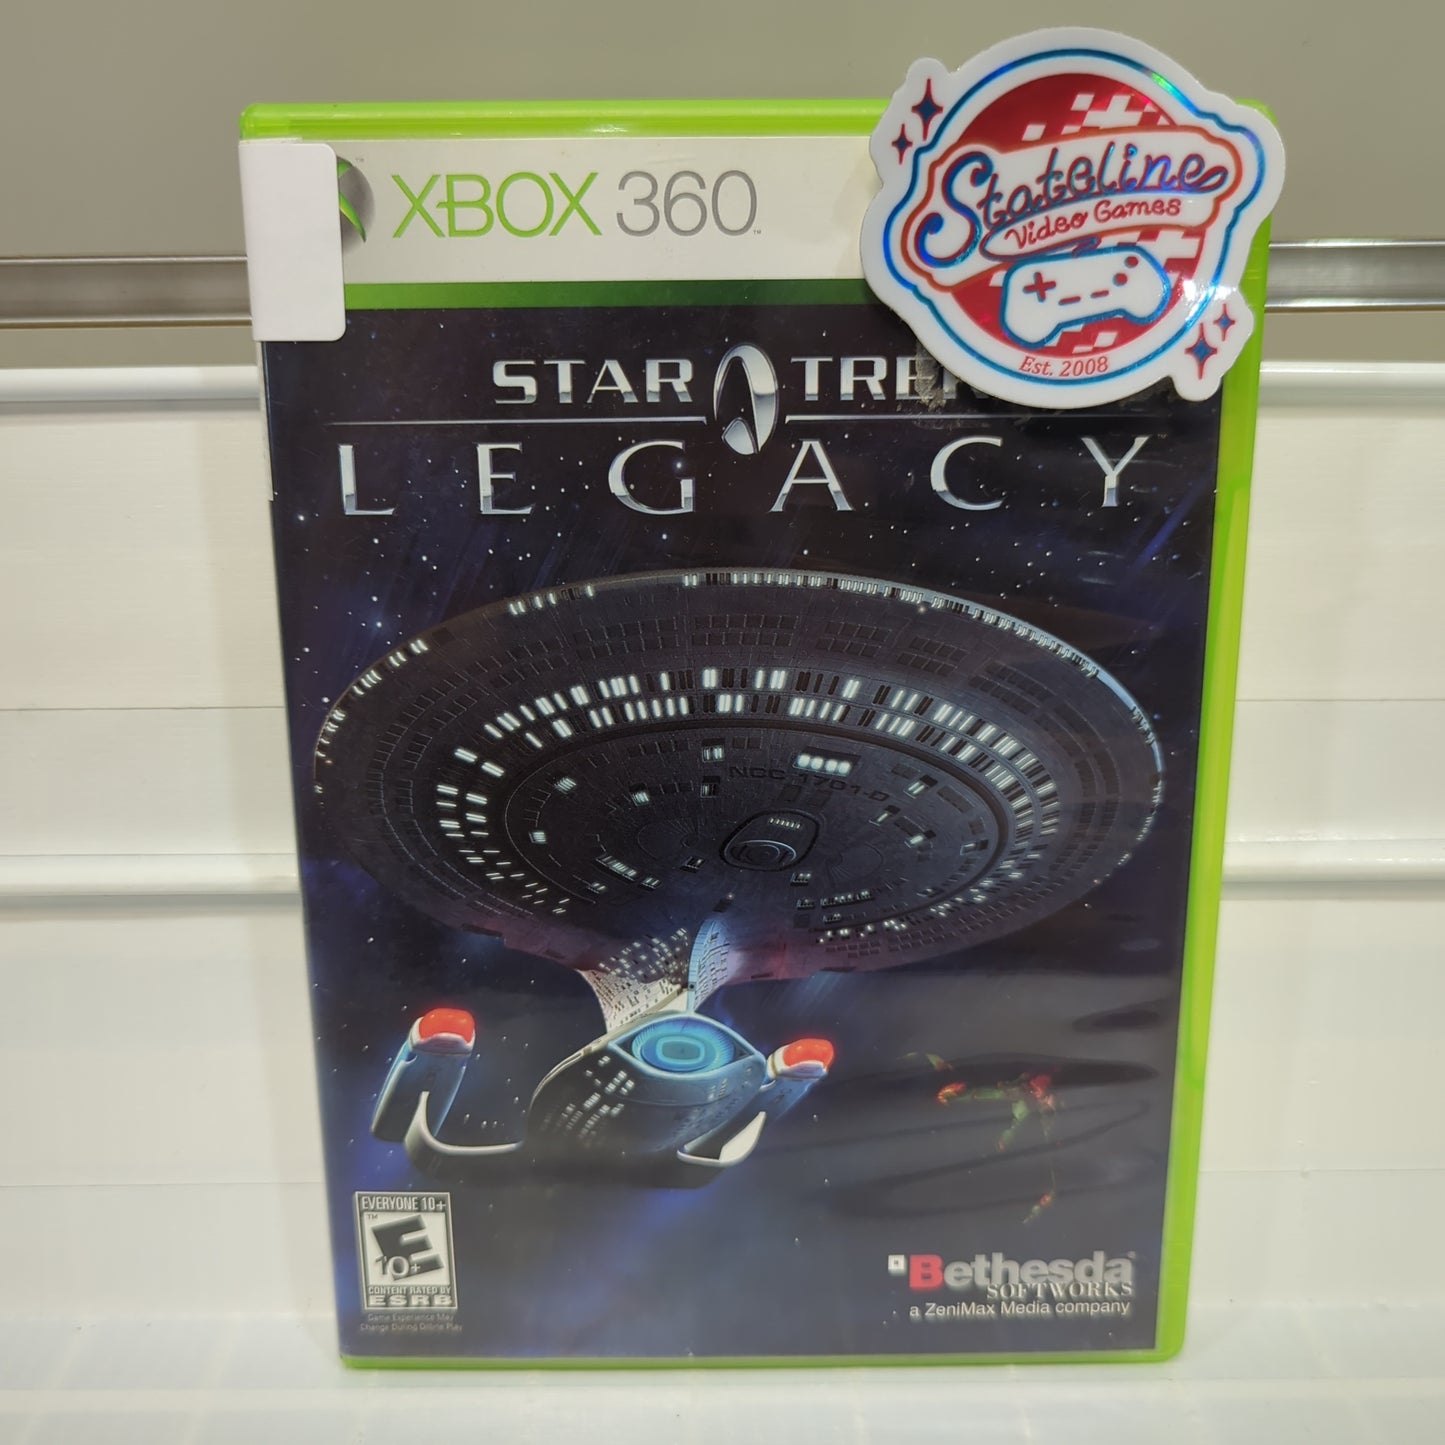 Star Trek Legacy - Xbox 360